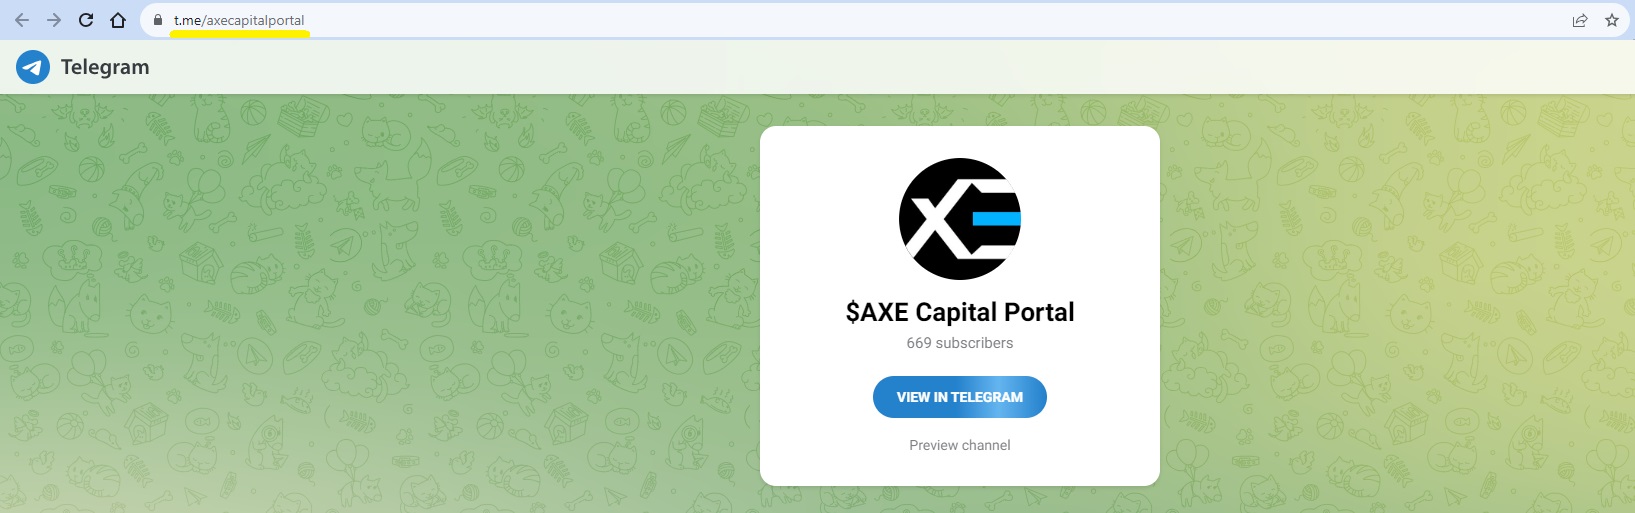 Telegram bot page for the Axe Cap coin